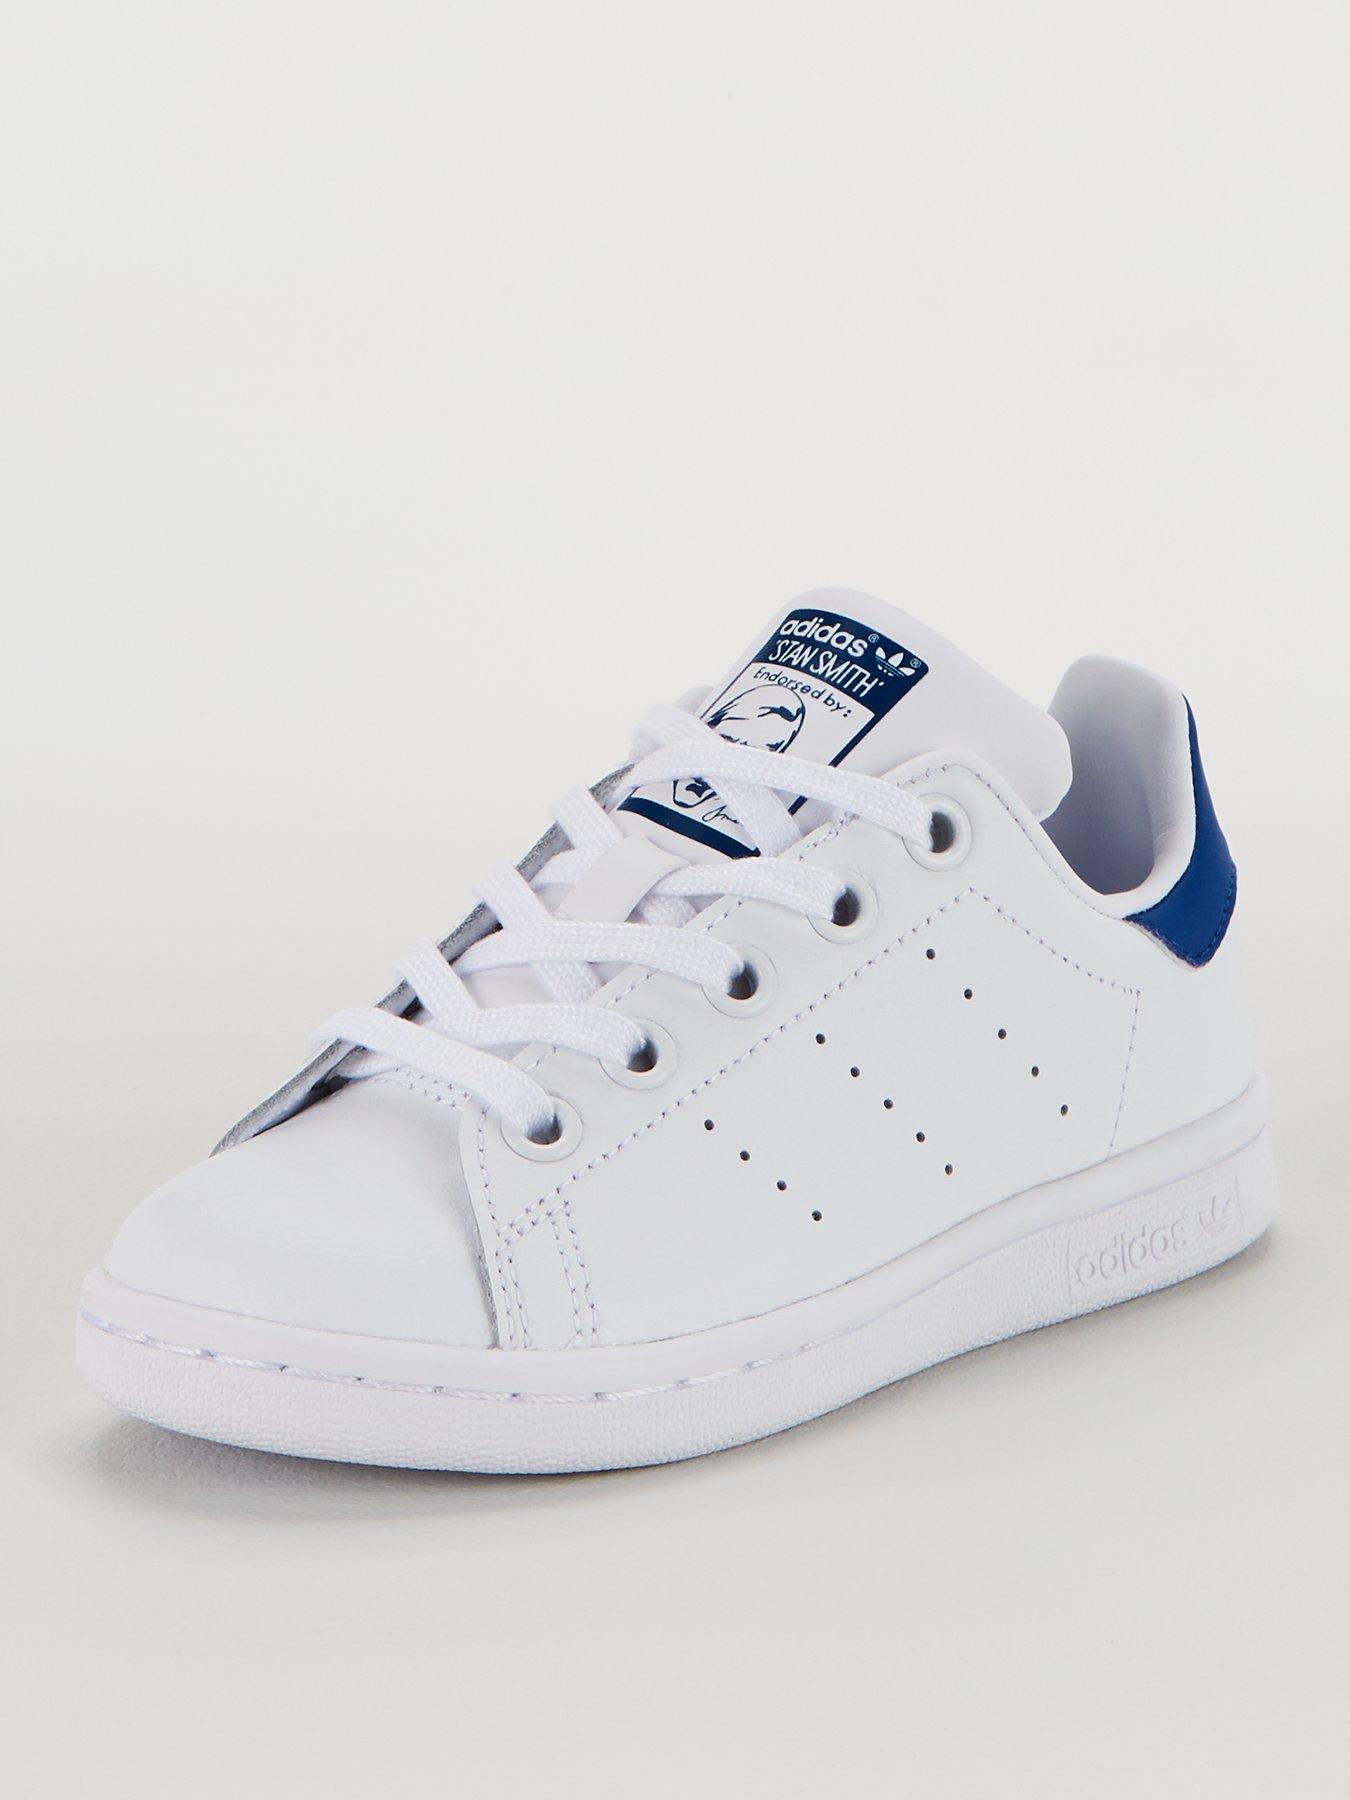 adidas stan smith blue and white